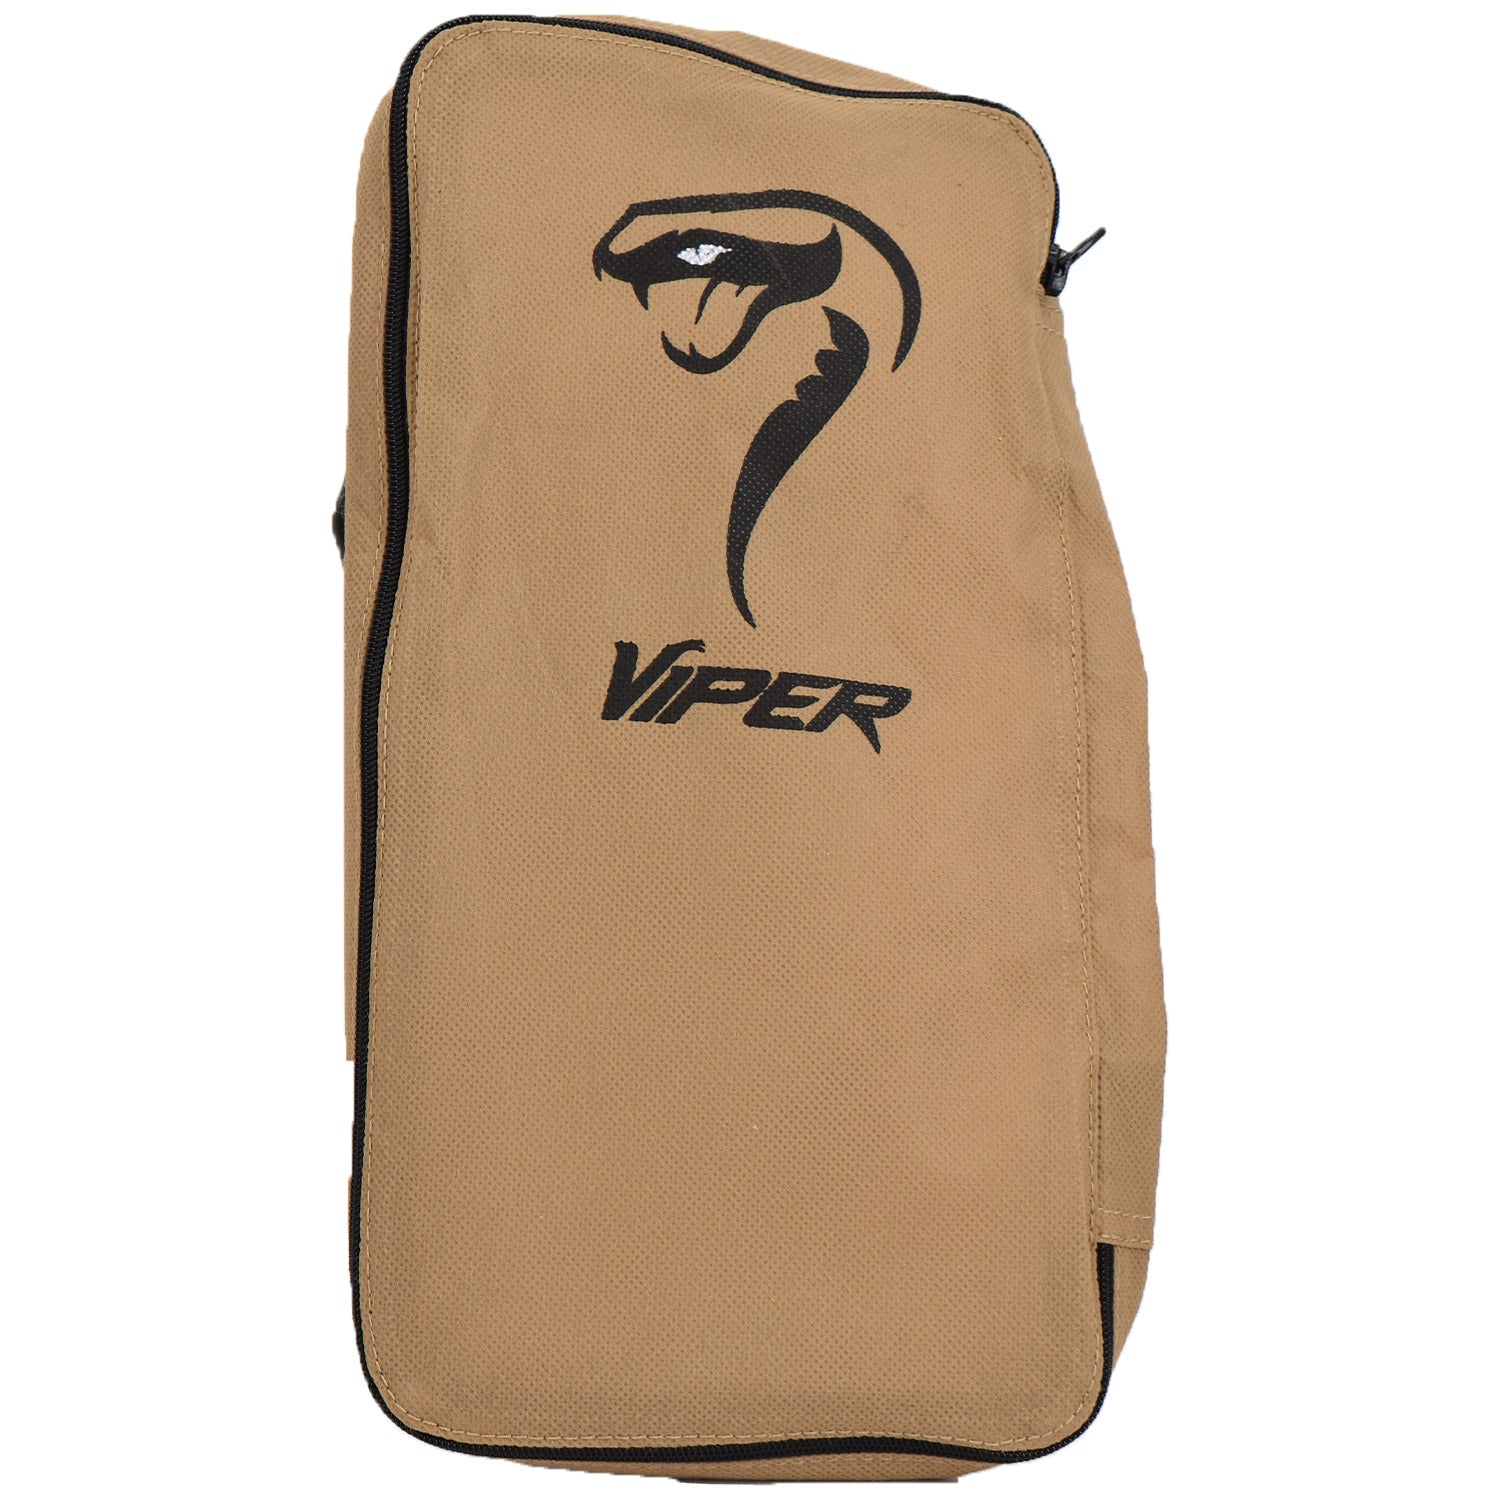 Viper Sports Performance Batting Gloves Bag